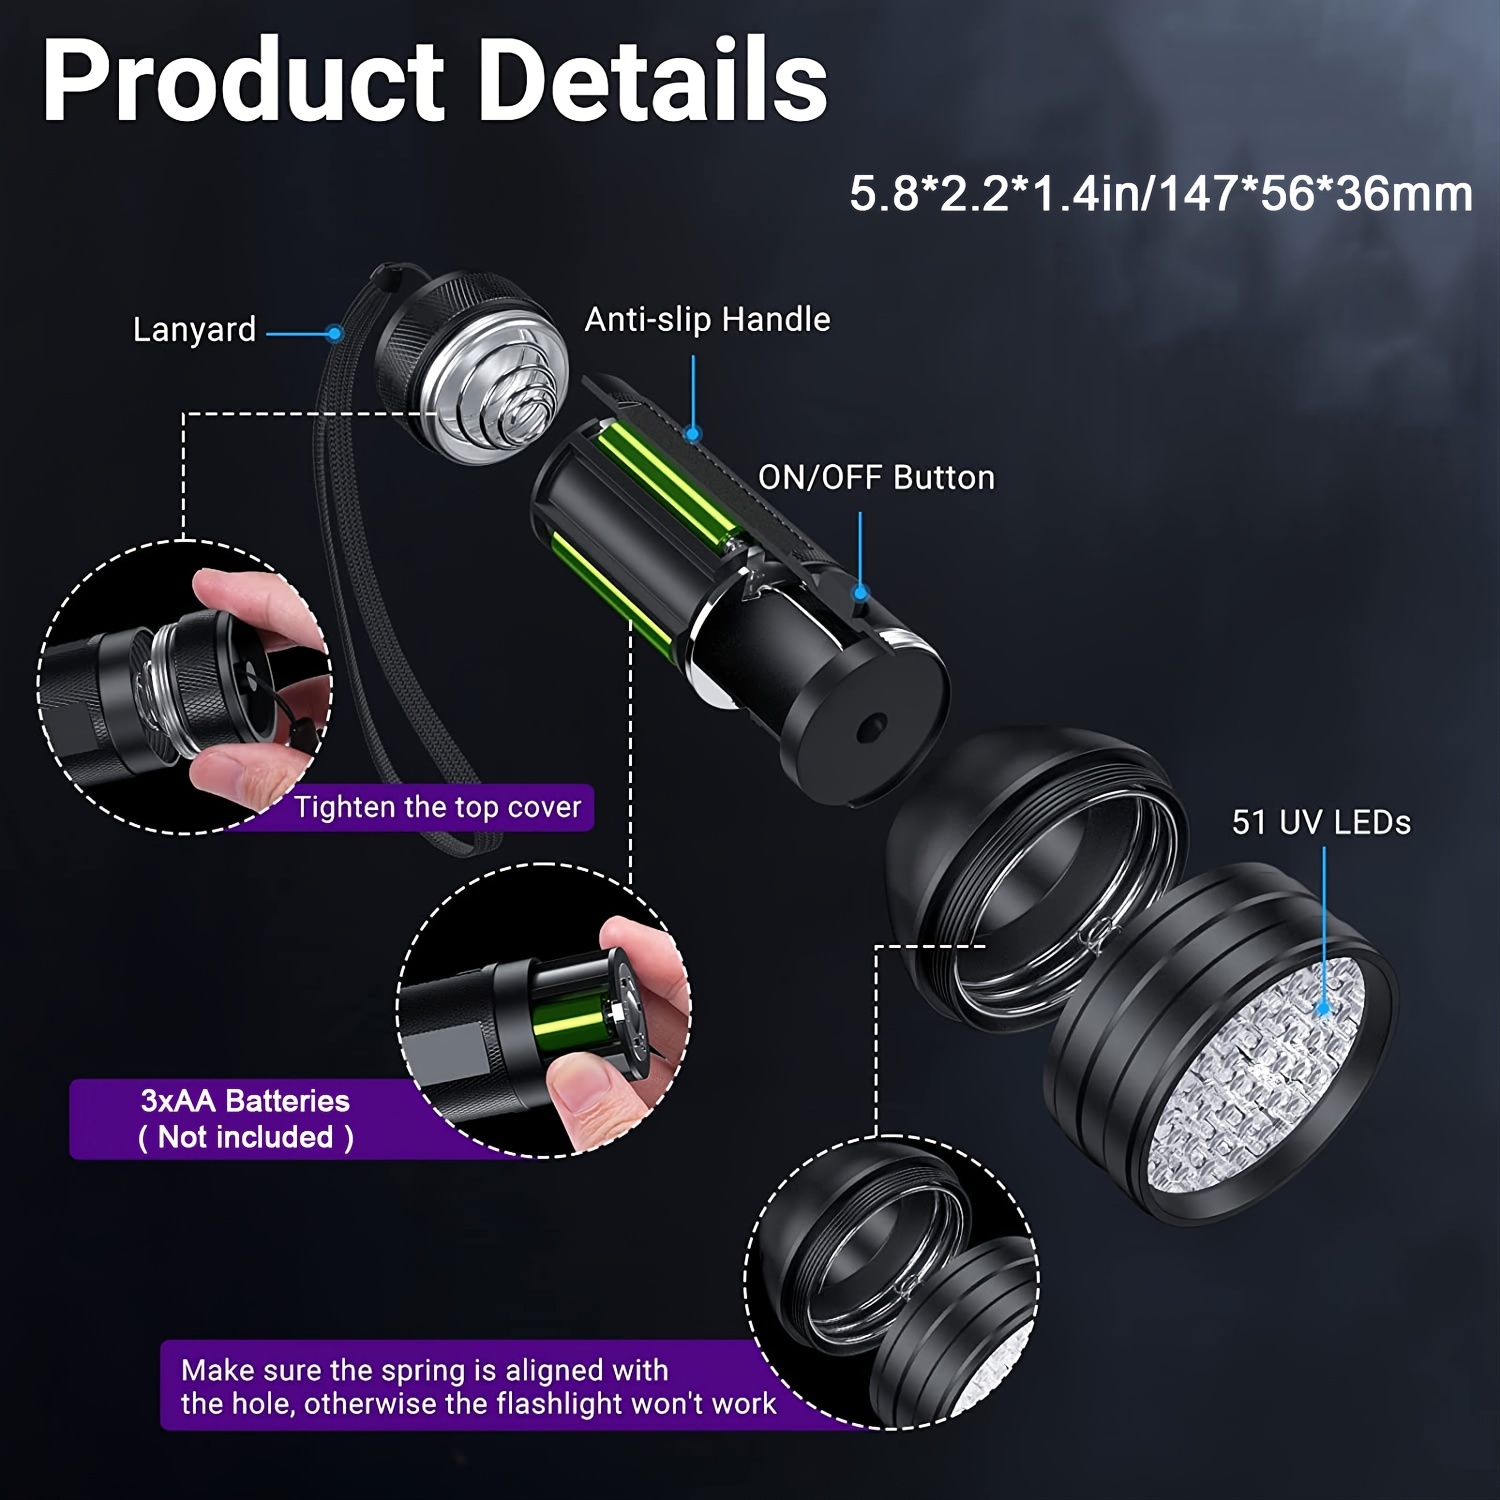 Escolite - Linterna UV de luz negra, 51 LED de 395 nM, linterna  ultravioleta de luz negra para detección de orina de mascotas, manchas  secas